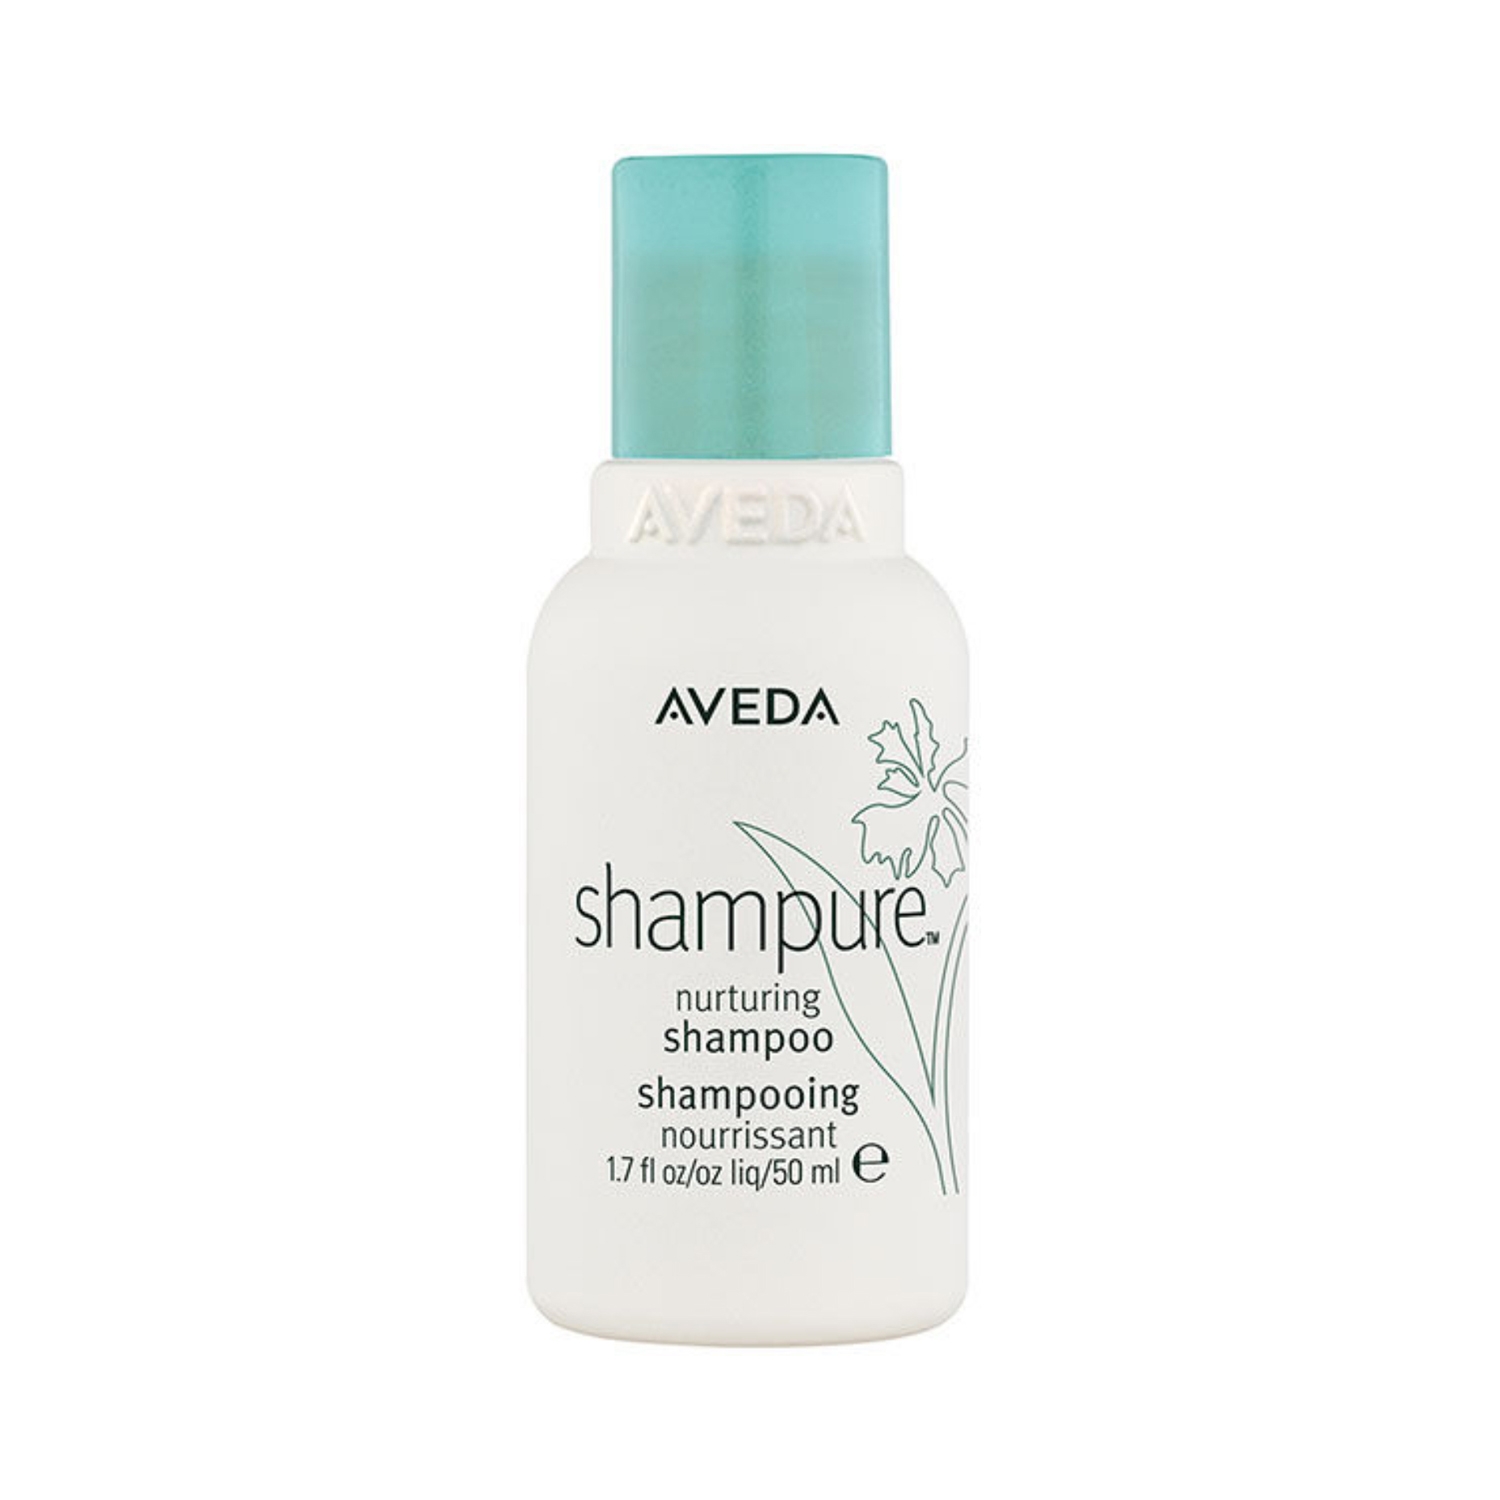 Aveda | Aveda Shampure Nurturing Shampoo (50ml)